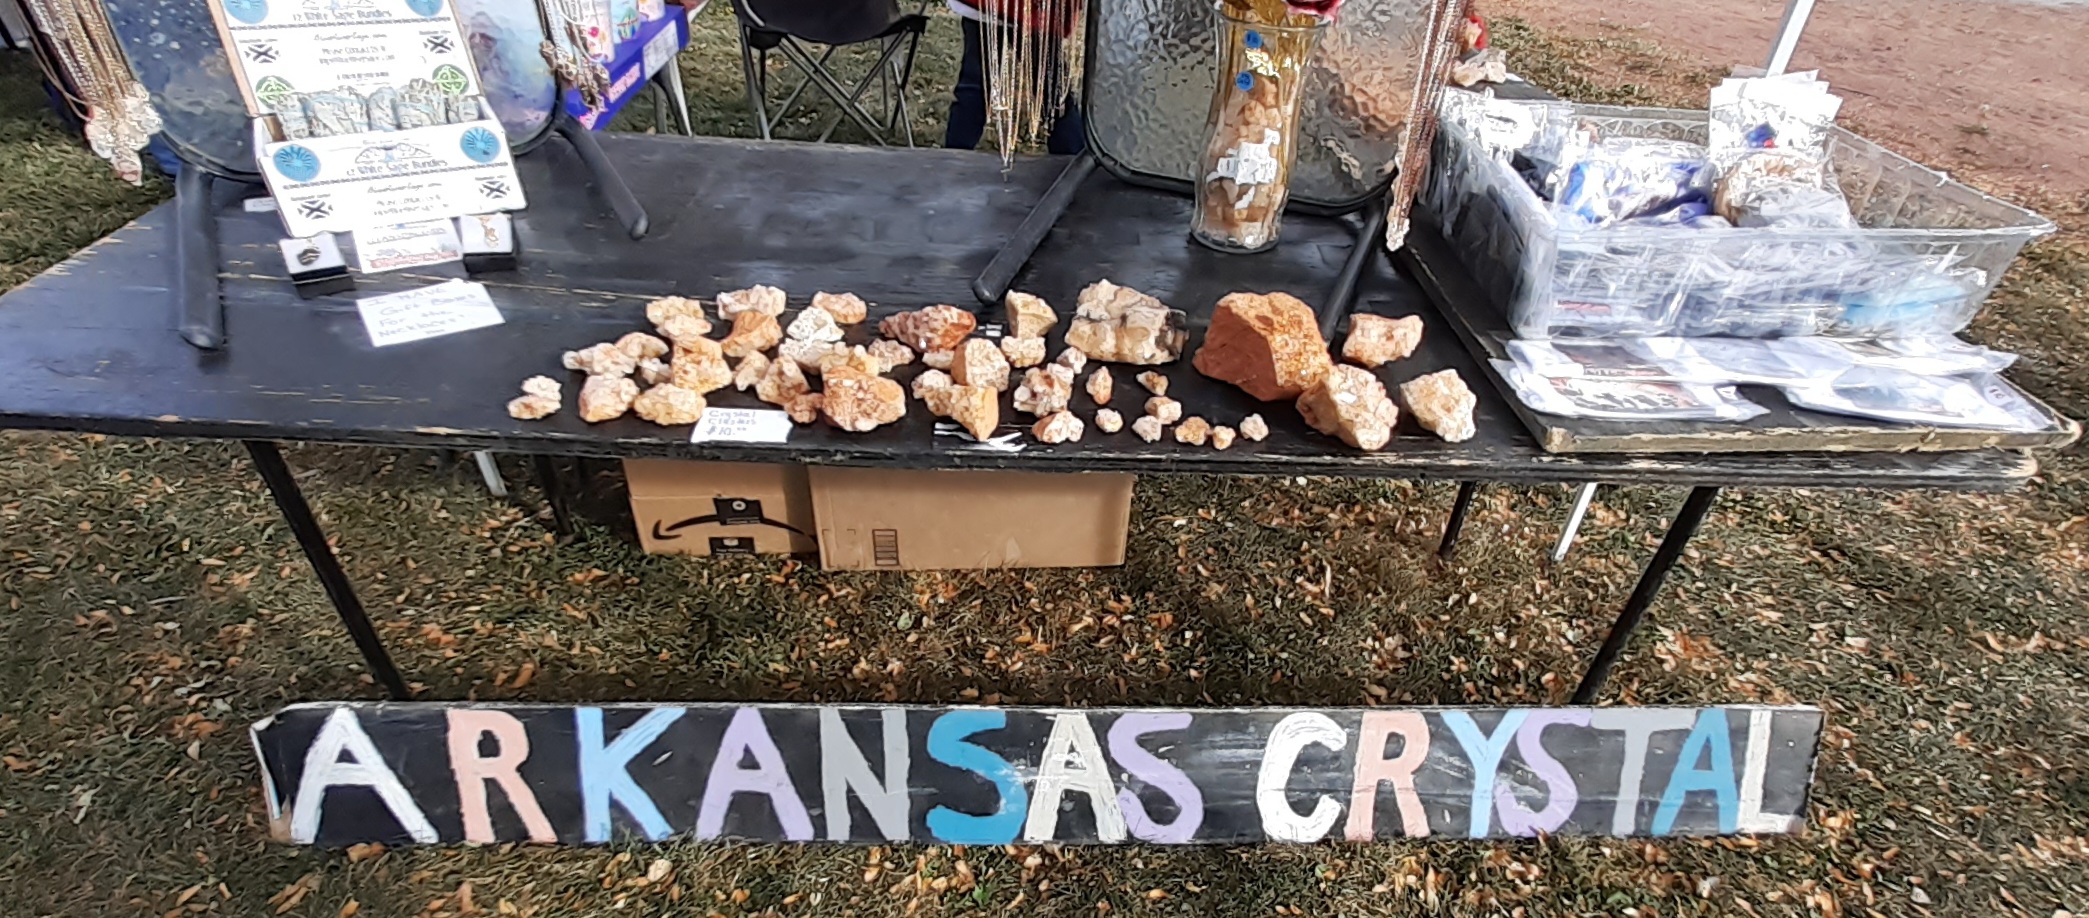 Arkansas Crystal seconews.org